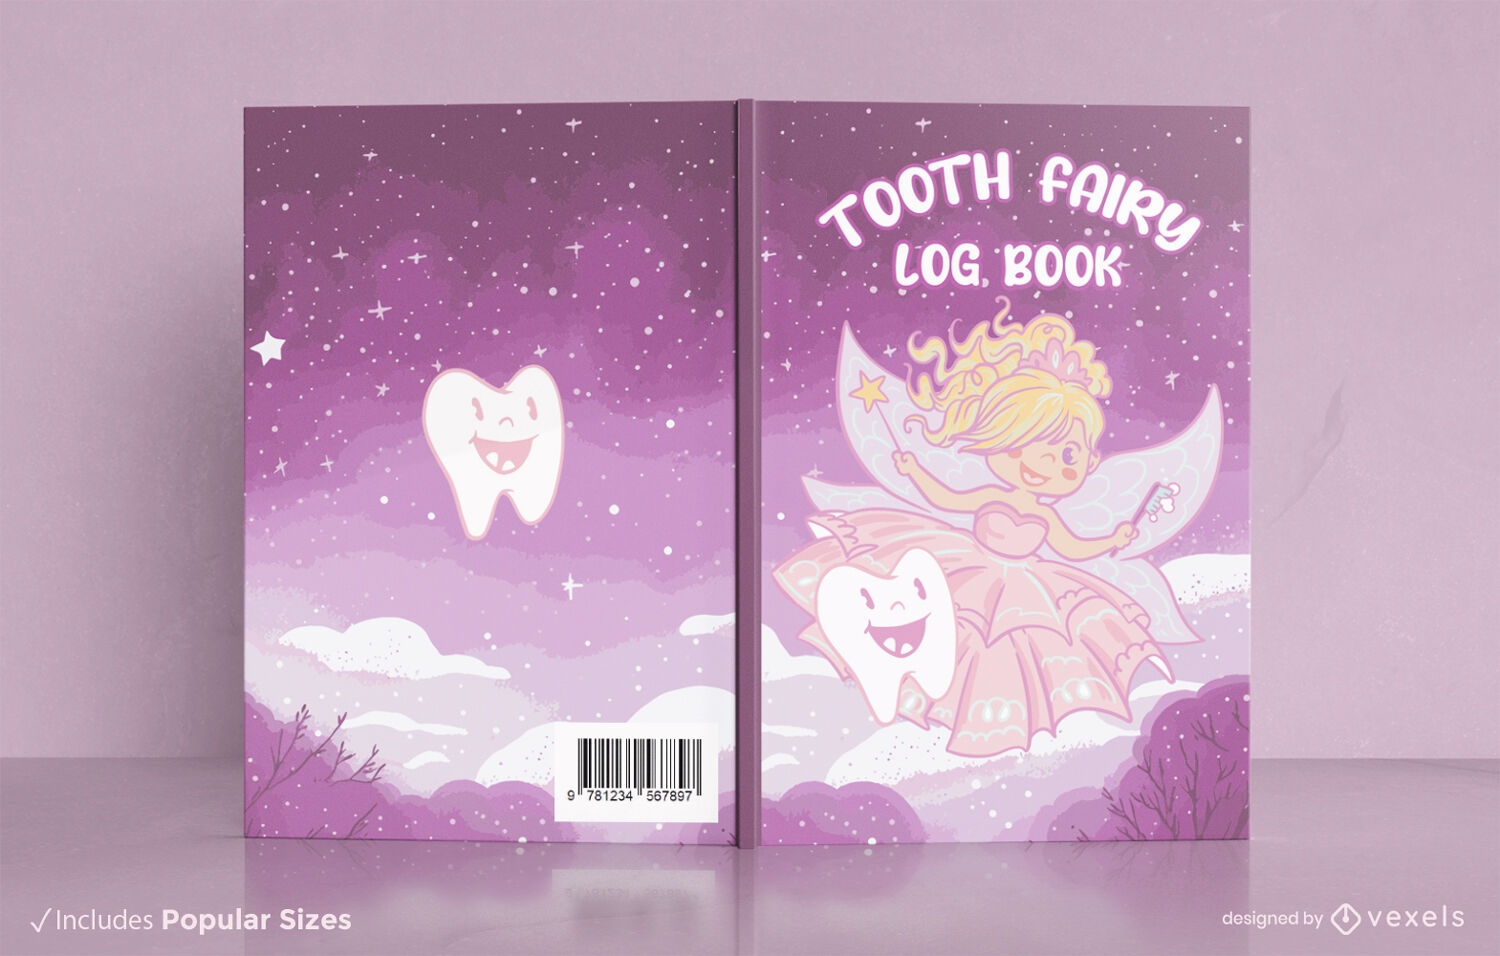 Cute tooth fairy book cover design